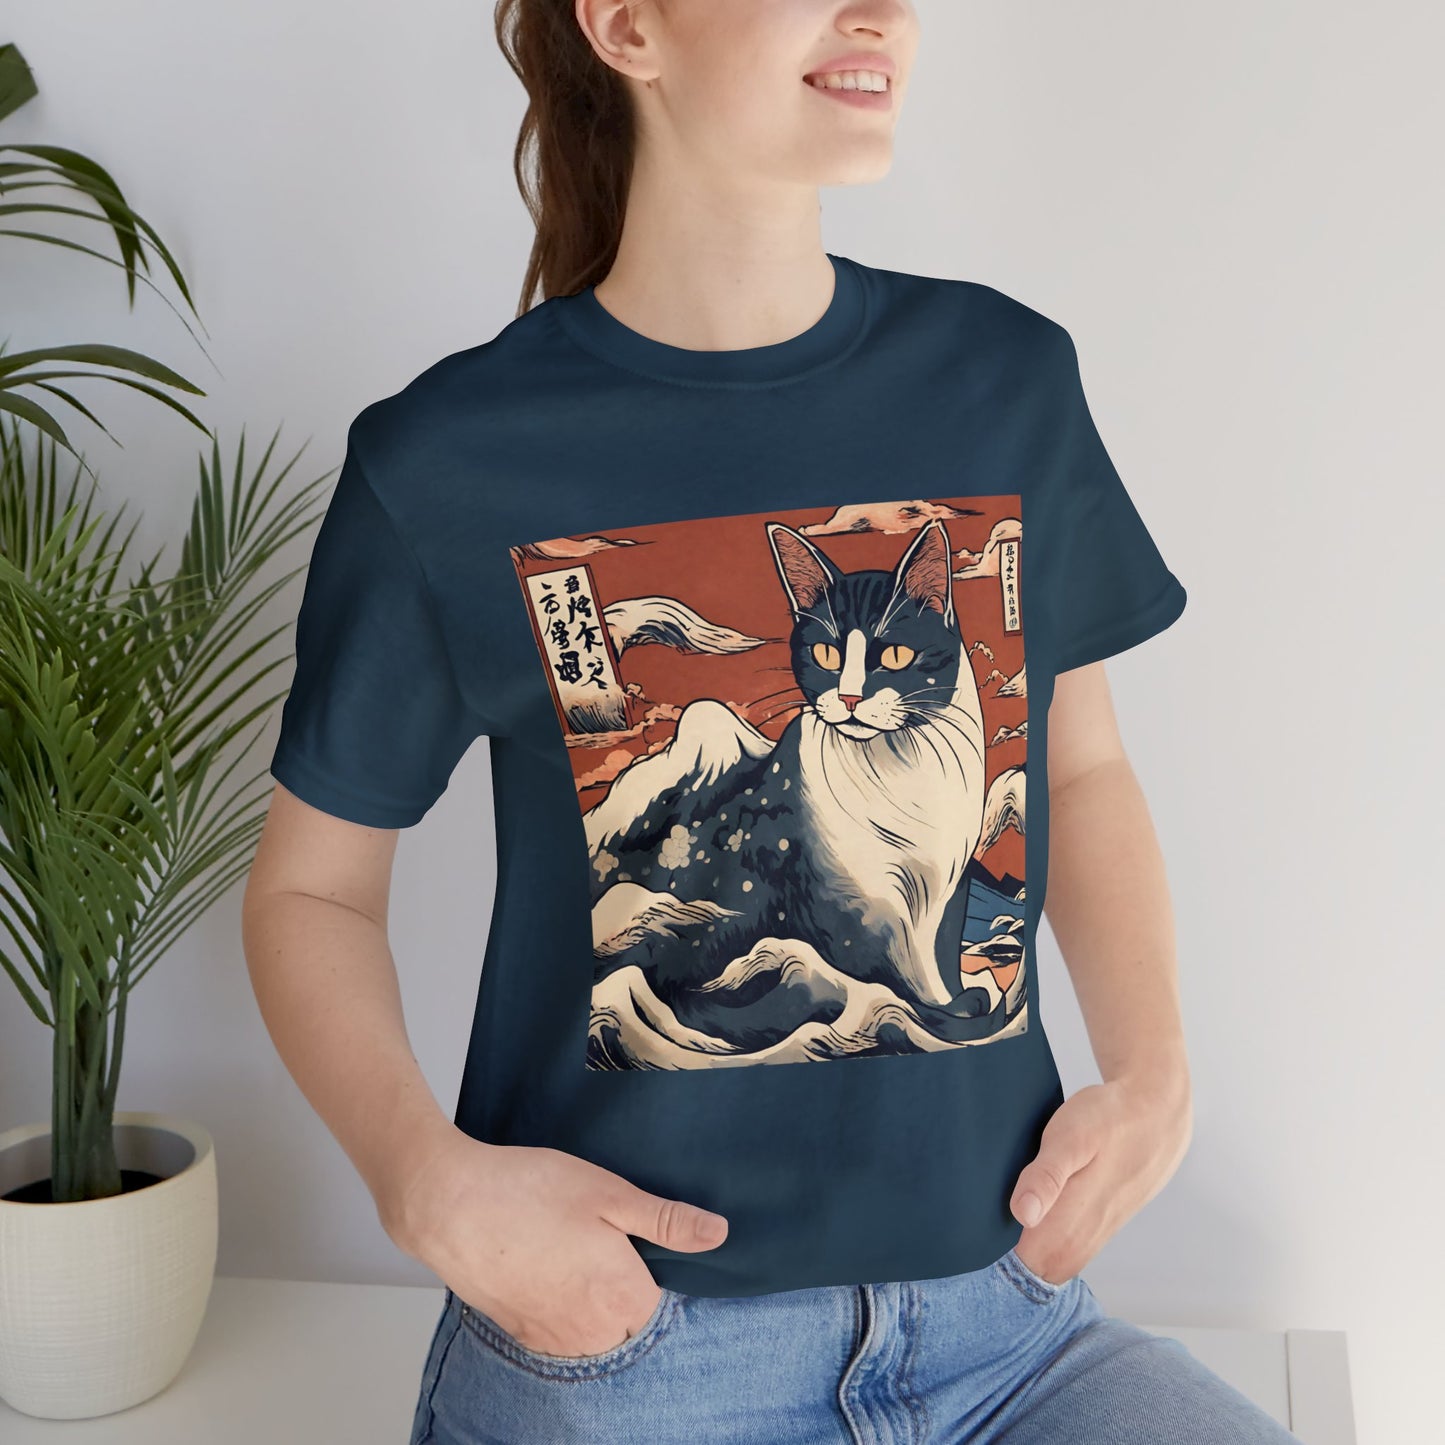 Cat Ukiyo-e style art T-shirt, cat japanese aesthetic Unisex Short Sleeve Tee, cat japan-themed art print shirt, The Great Wave tee shirt